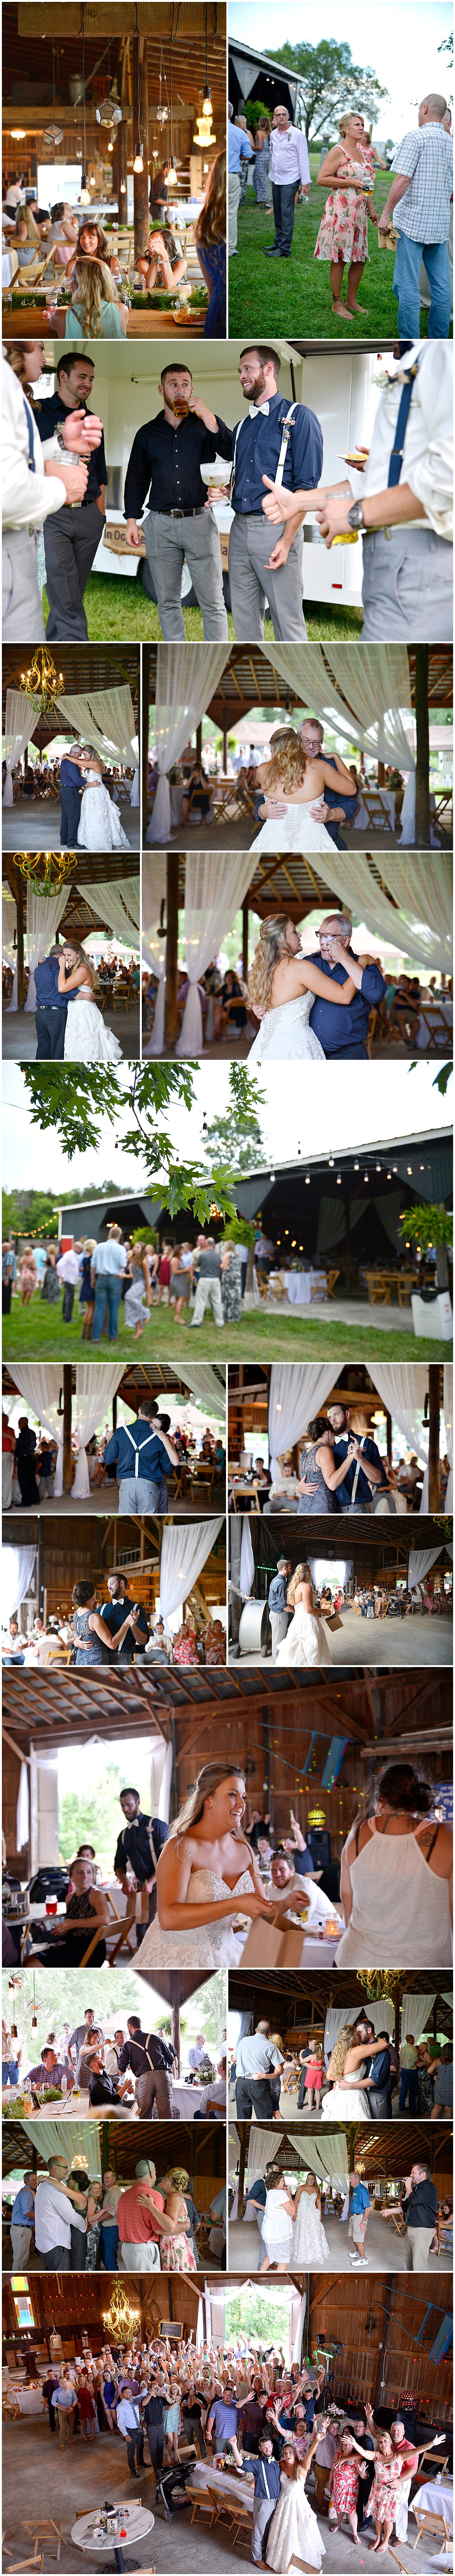 barn-wedding-reception-delaware-ohio